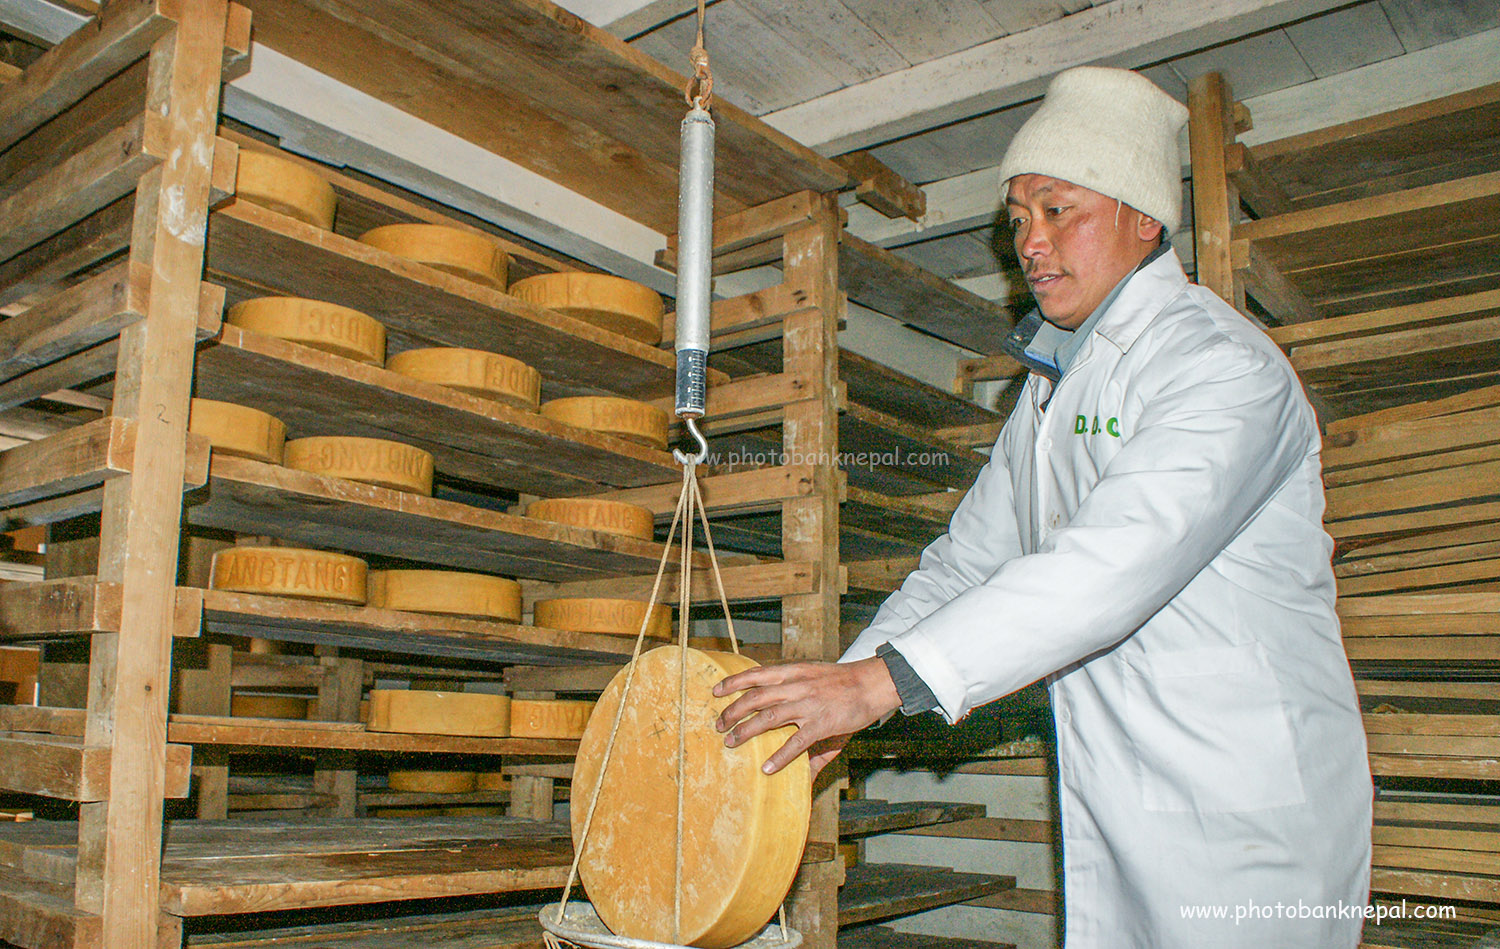 Rasuwa, the cheese production